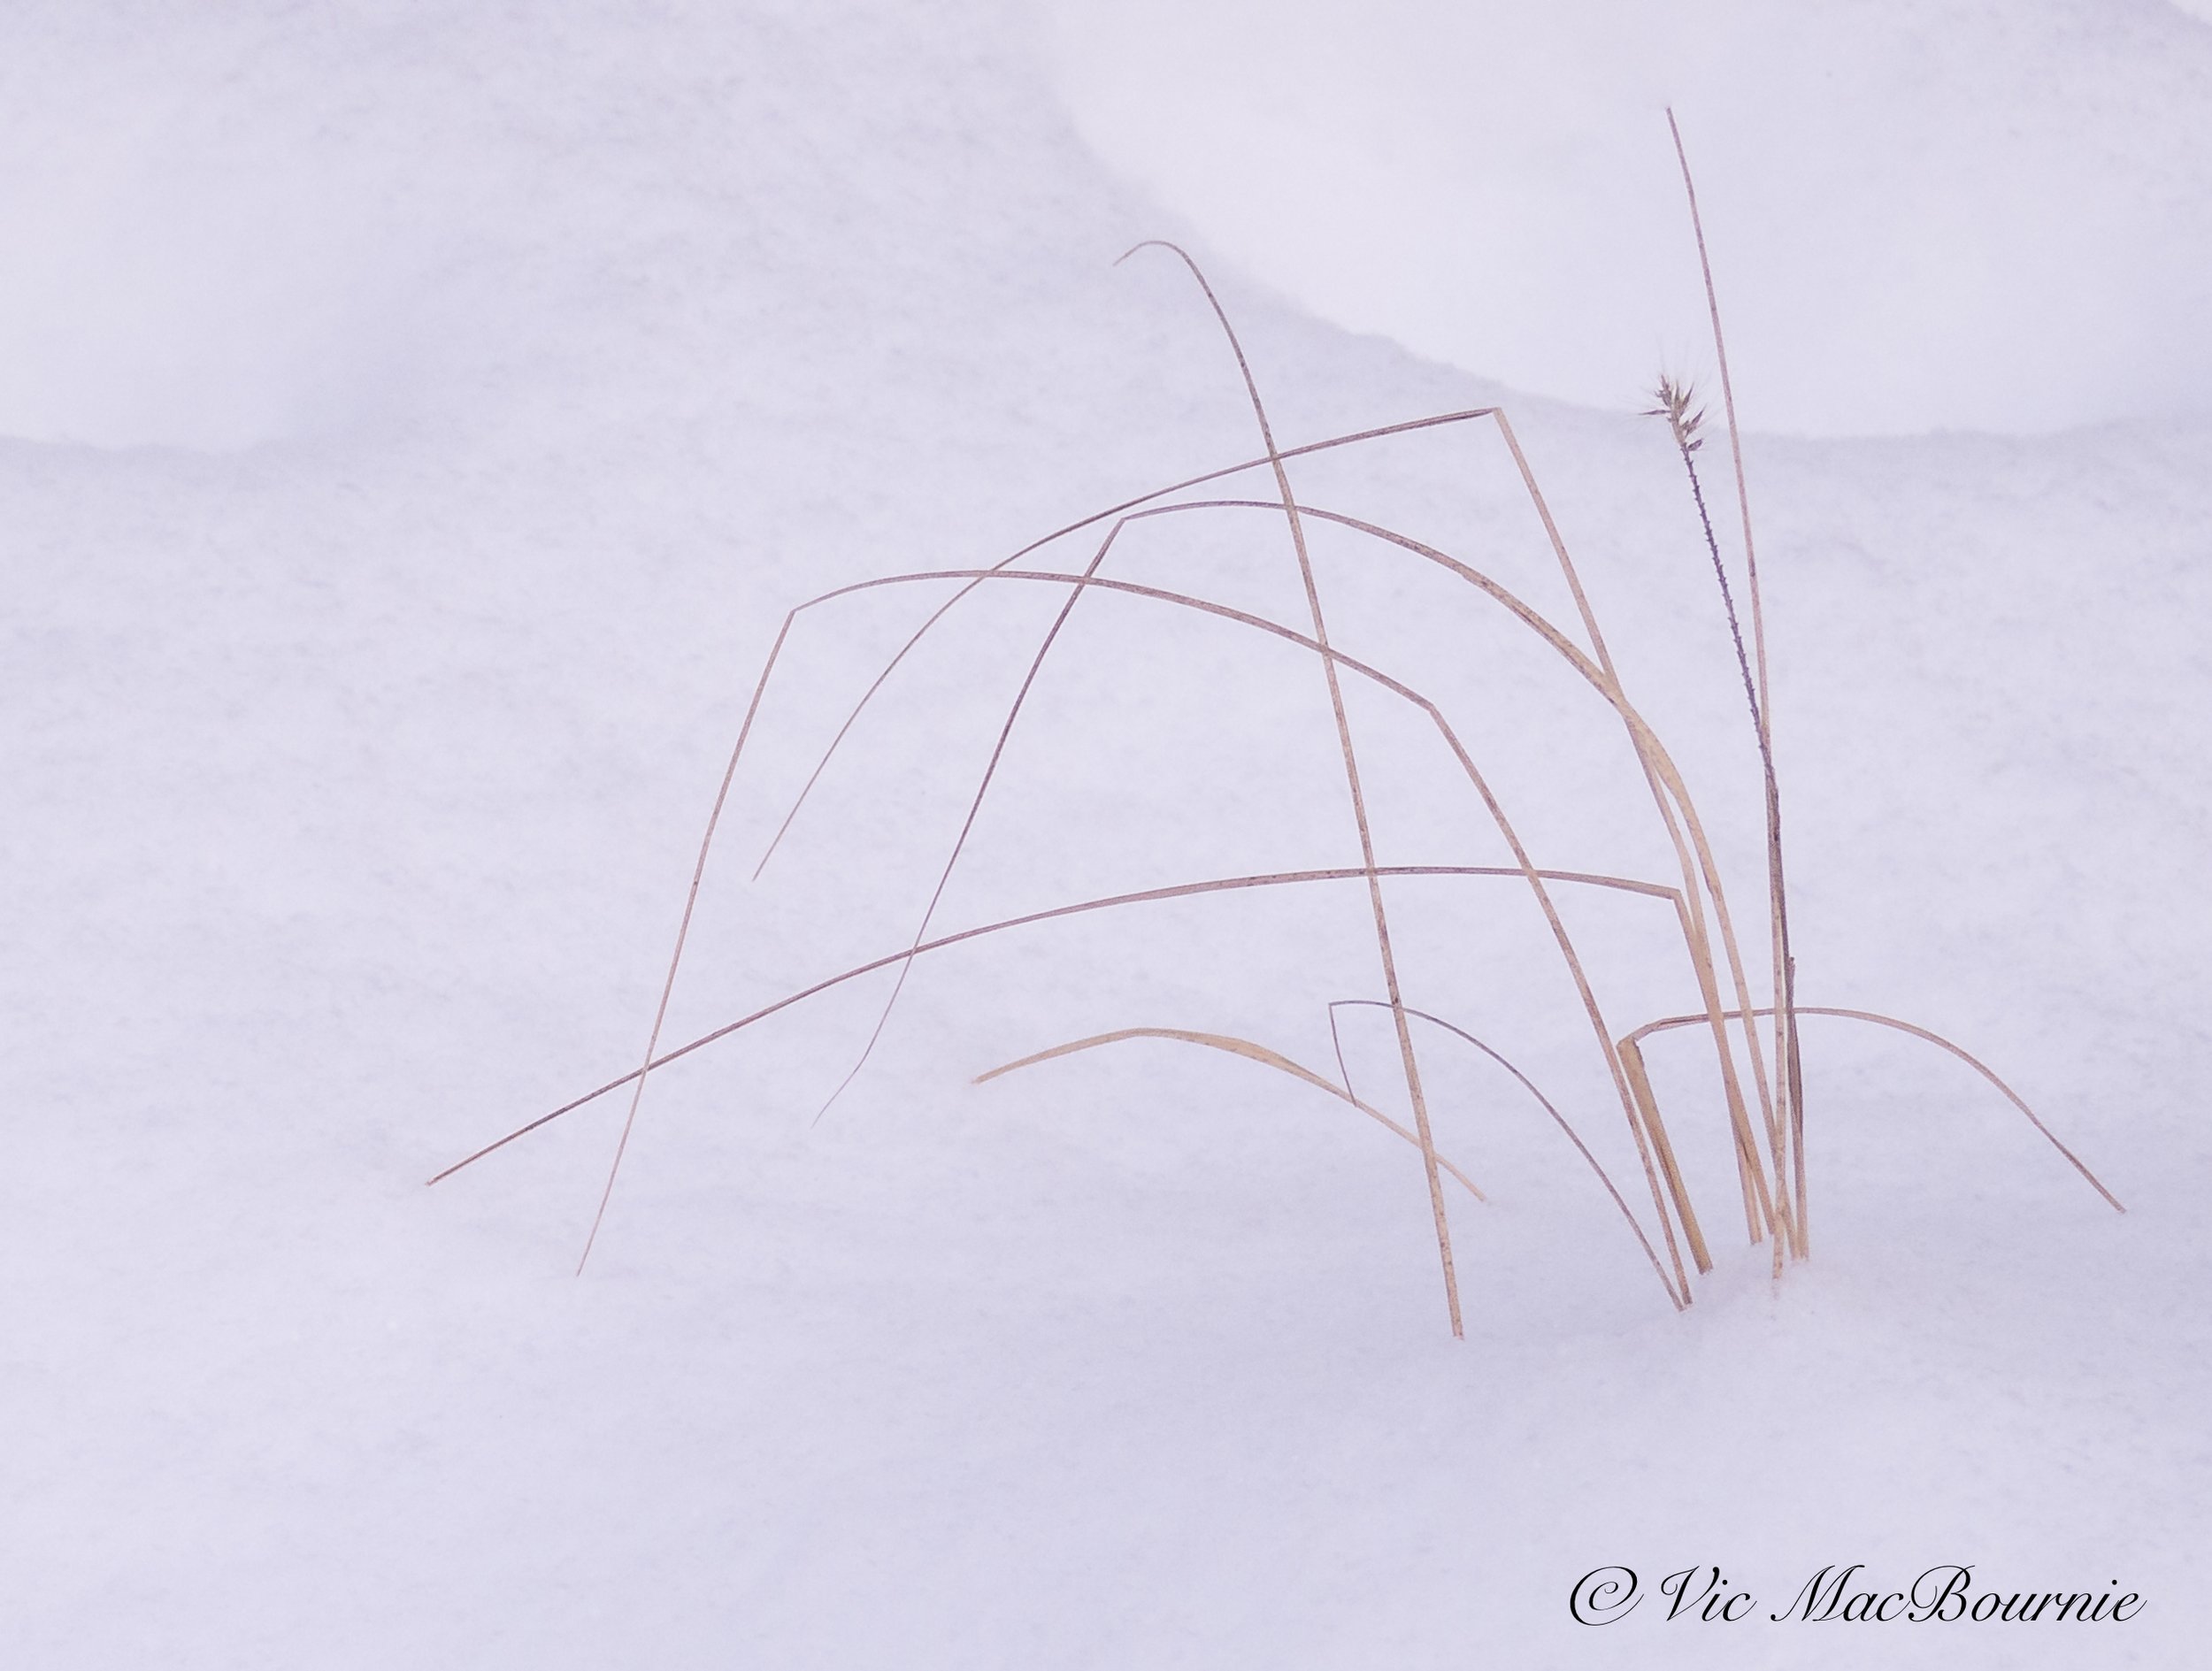 Grasses in snow